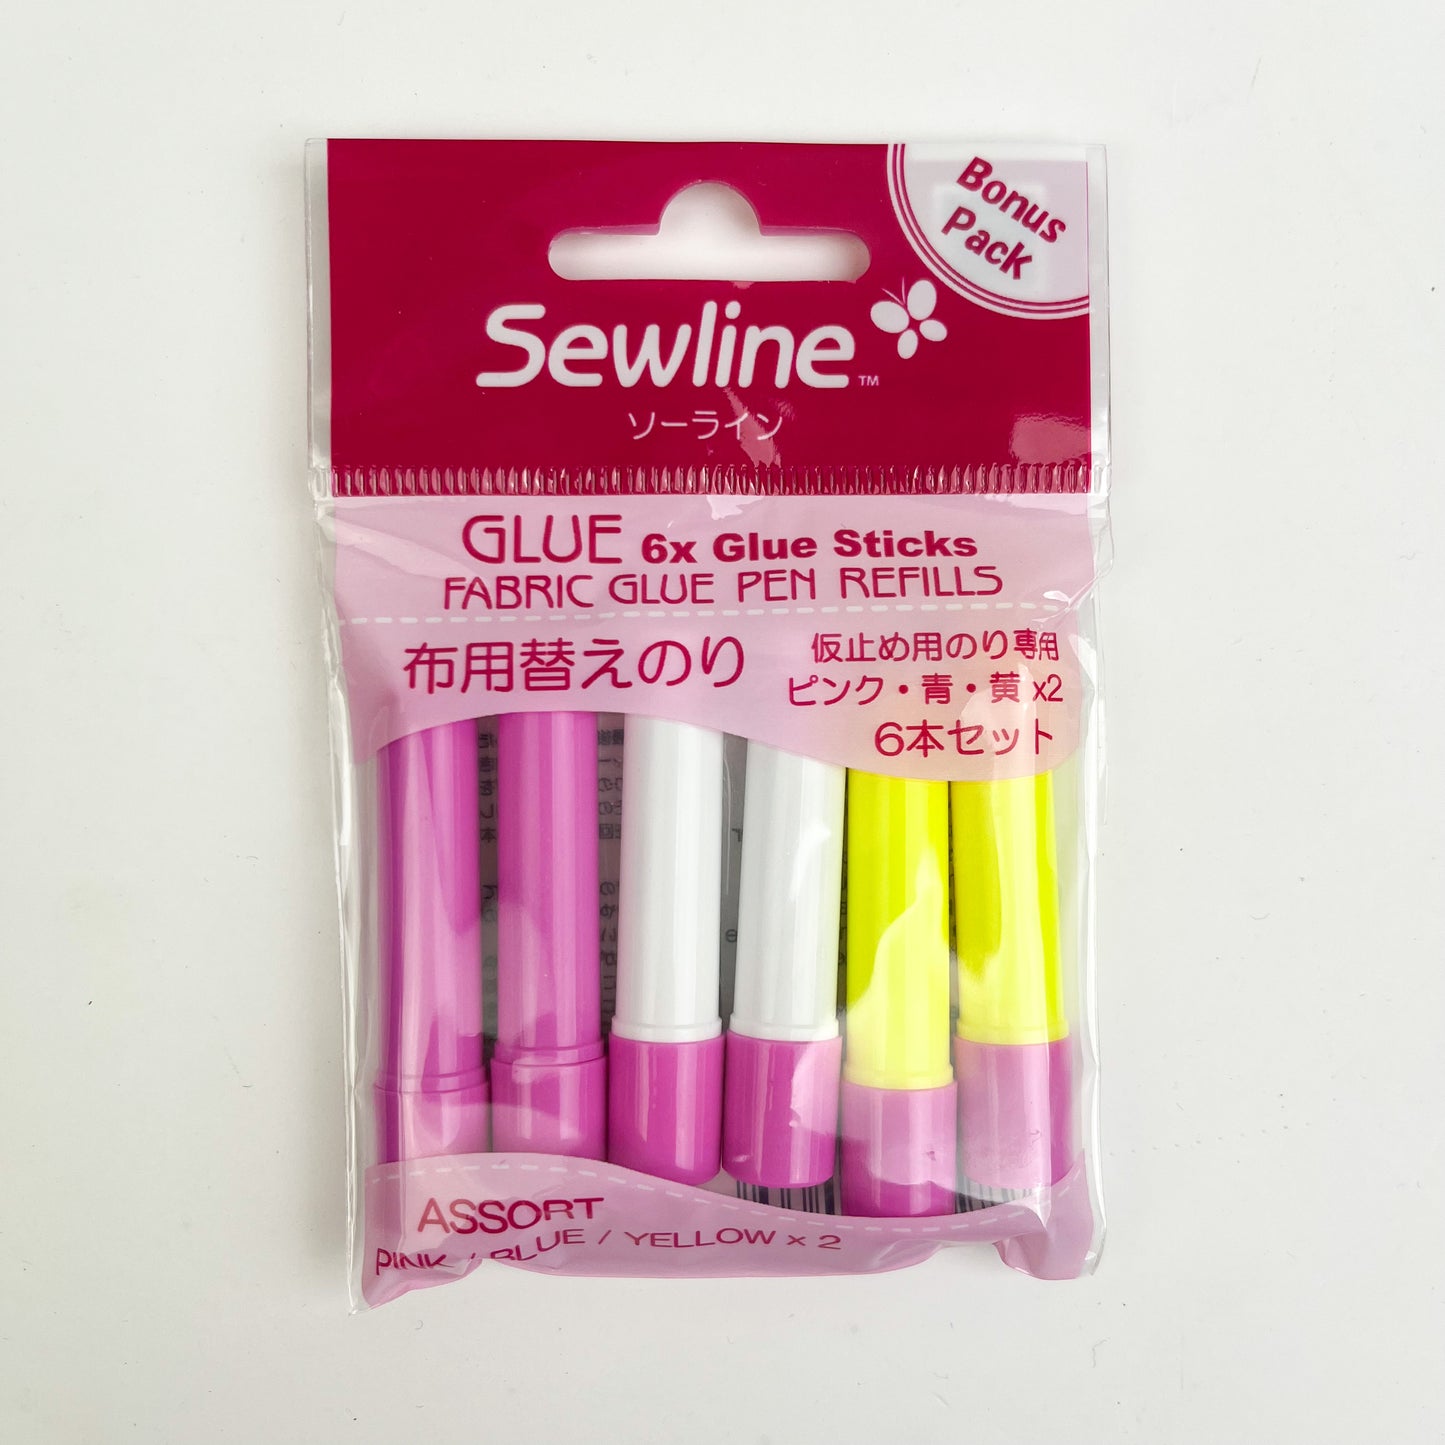 Sewline - Fabric Glue Pen REFILLS - 6 Pack